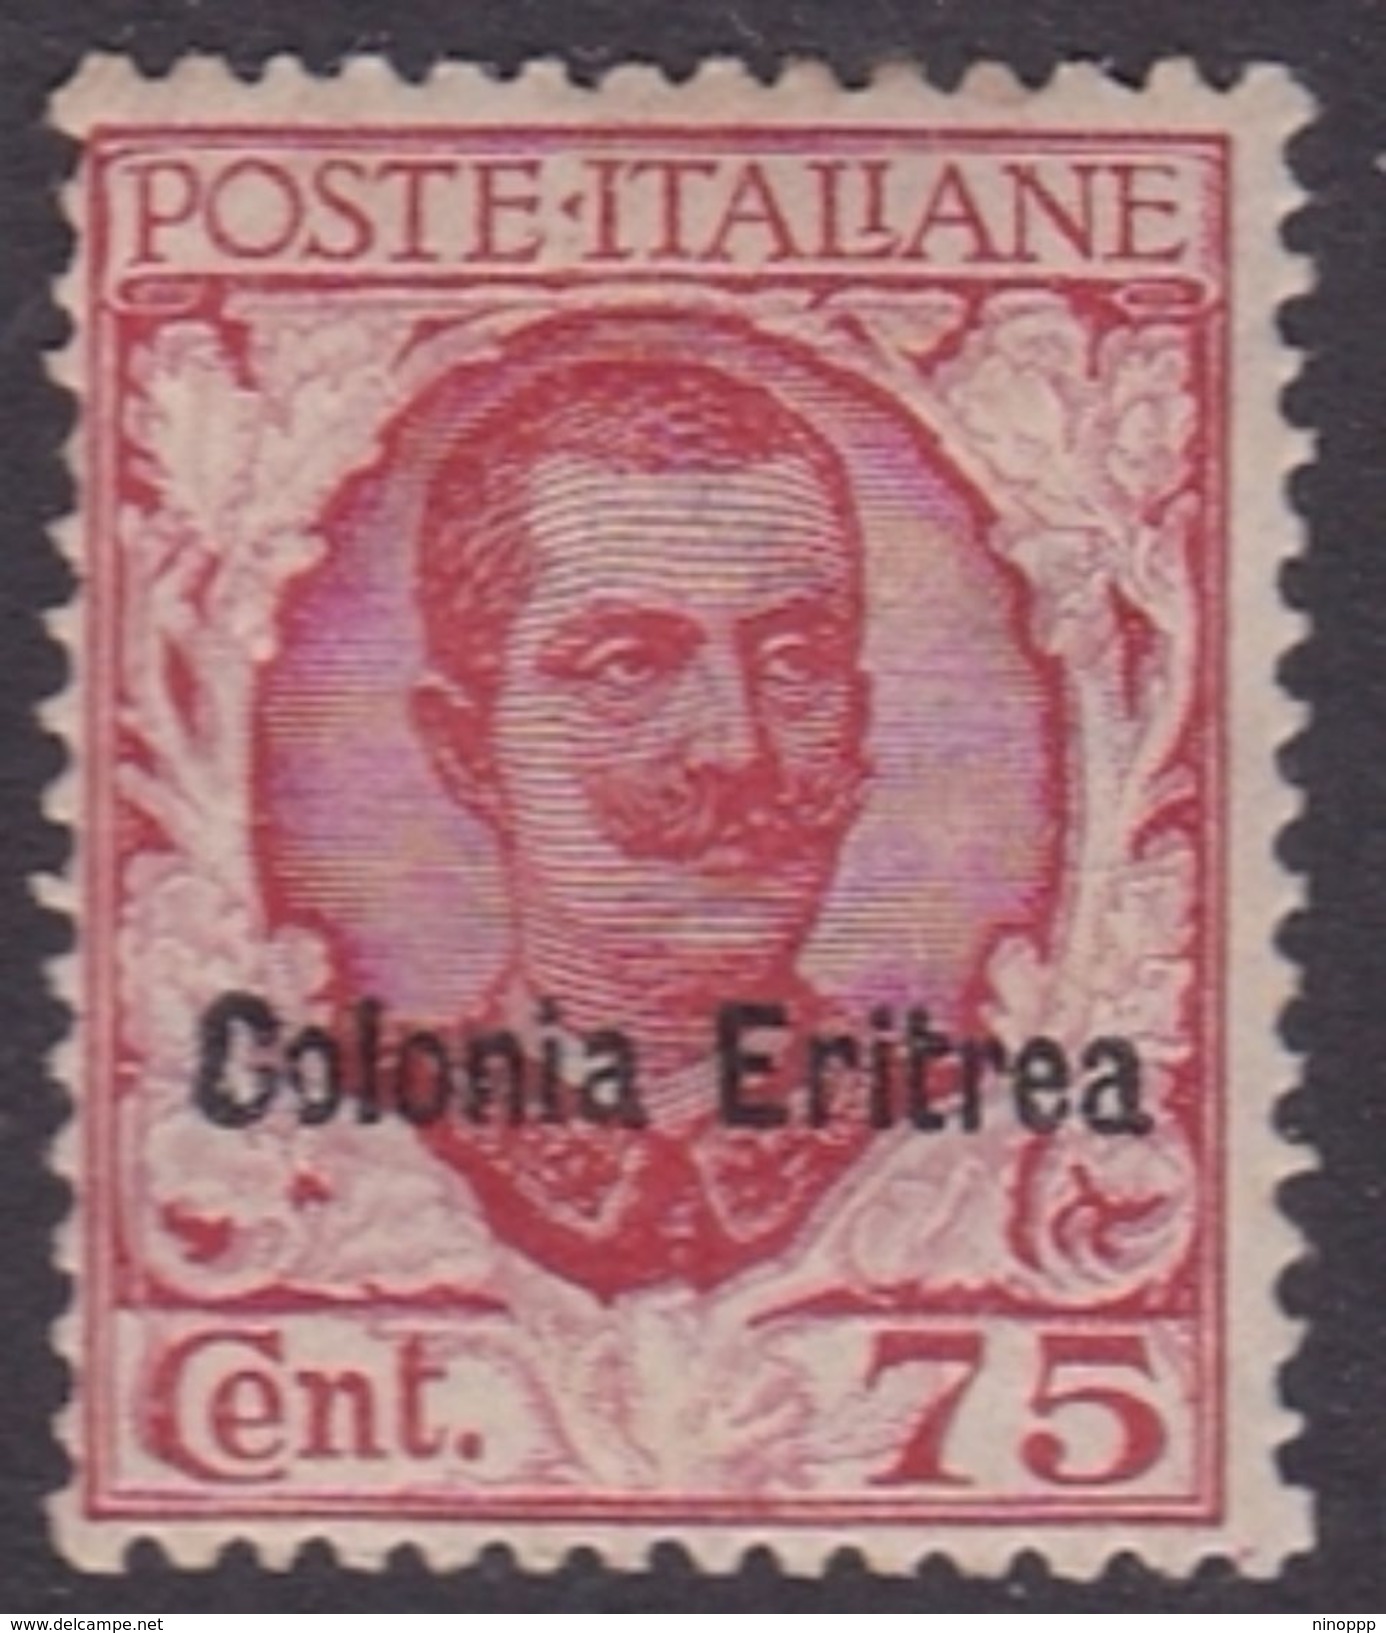 Italy-Colonies And Territories-Eritrea S 125 1928 King Vittorio Emanuele III, 75c Carmine And Roset, Mint Hinged - Eritrea